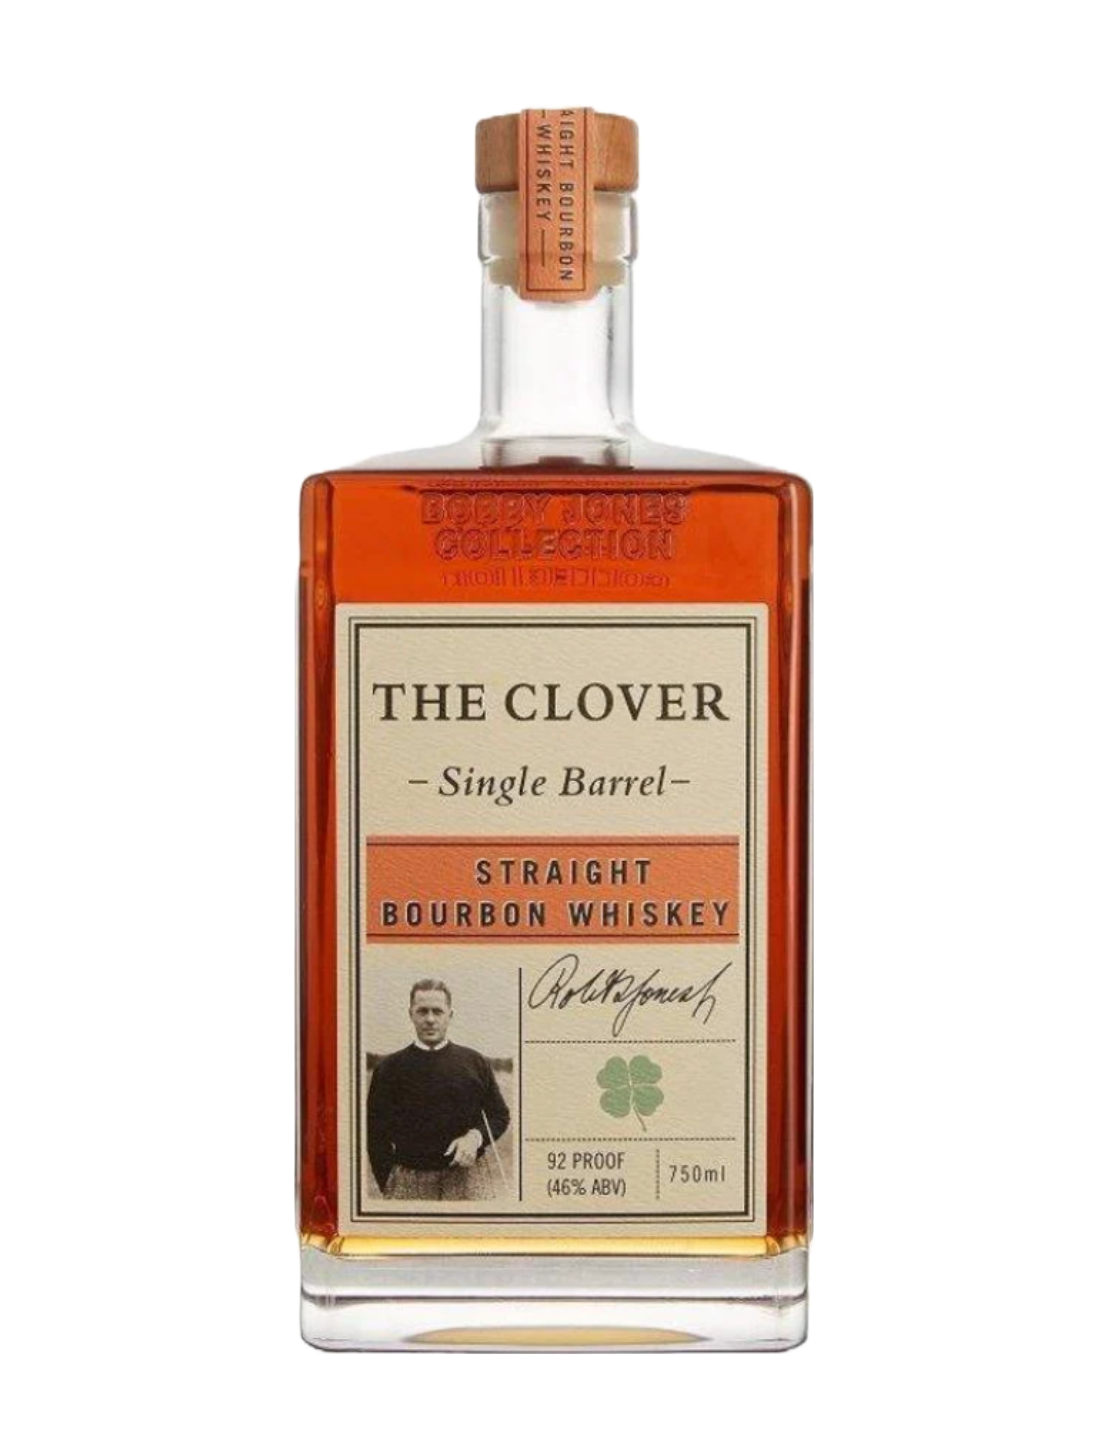 An elegant bottle of The Clover Single Barrel Bourbon in front of a plain, white background